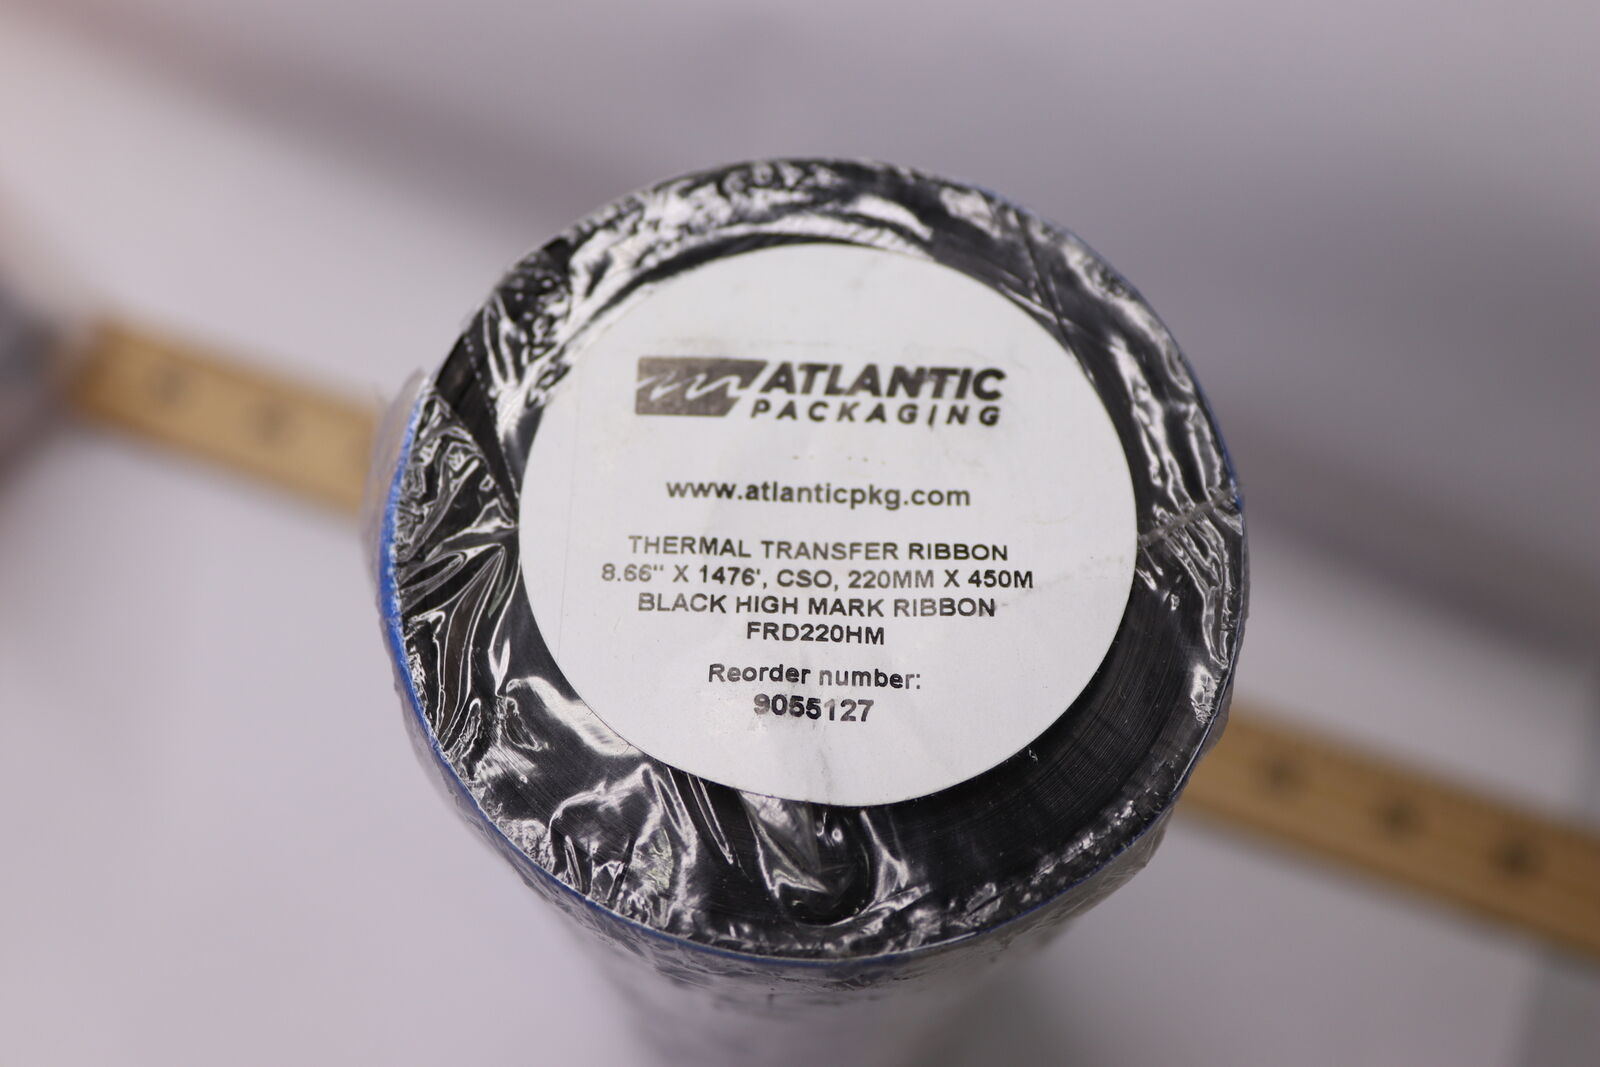 Atlantic Packaging Thermal Transfer Ribbon Black High Mark Resin 8.66